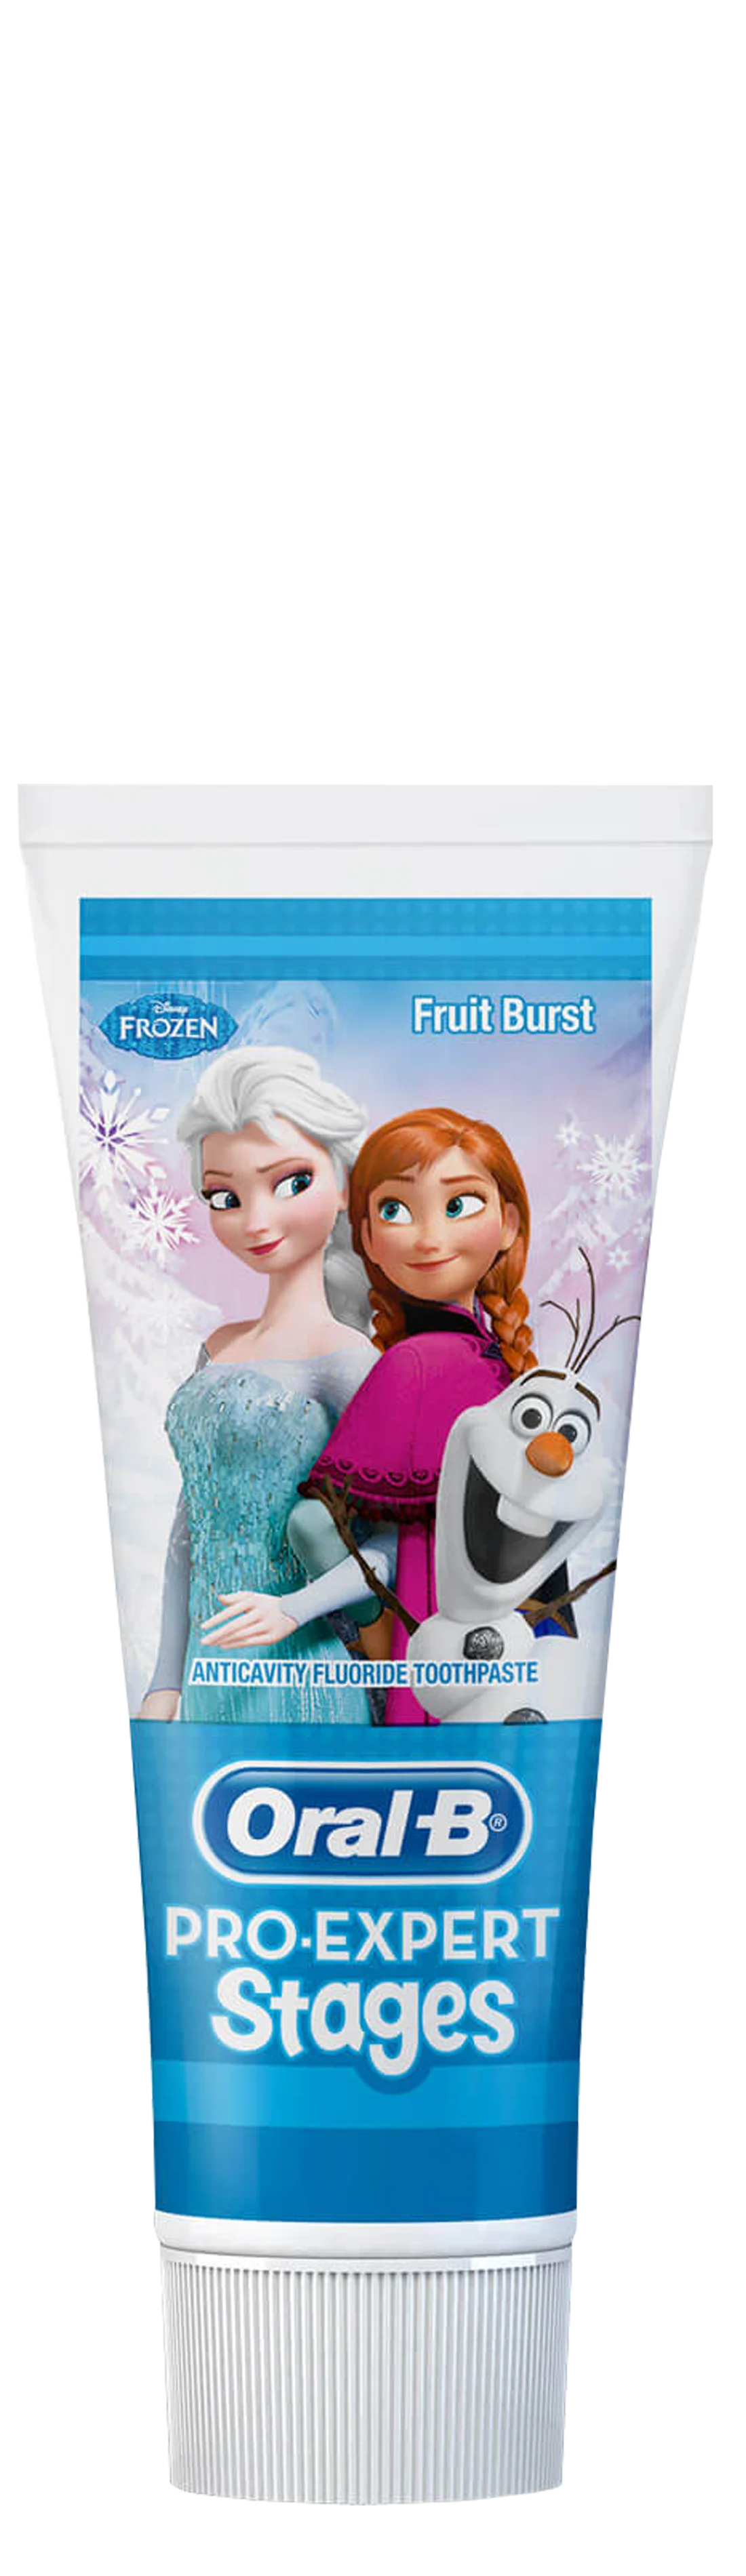 Sjov børnetandpasta med Disneys Frozen figurer 